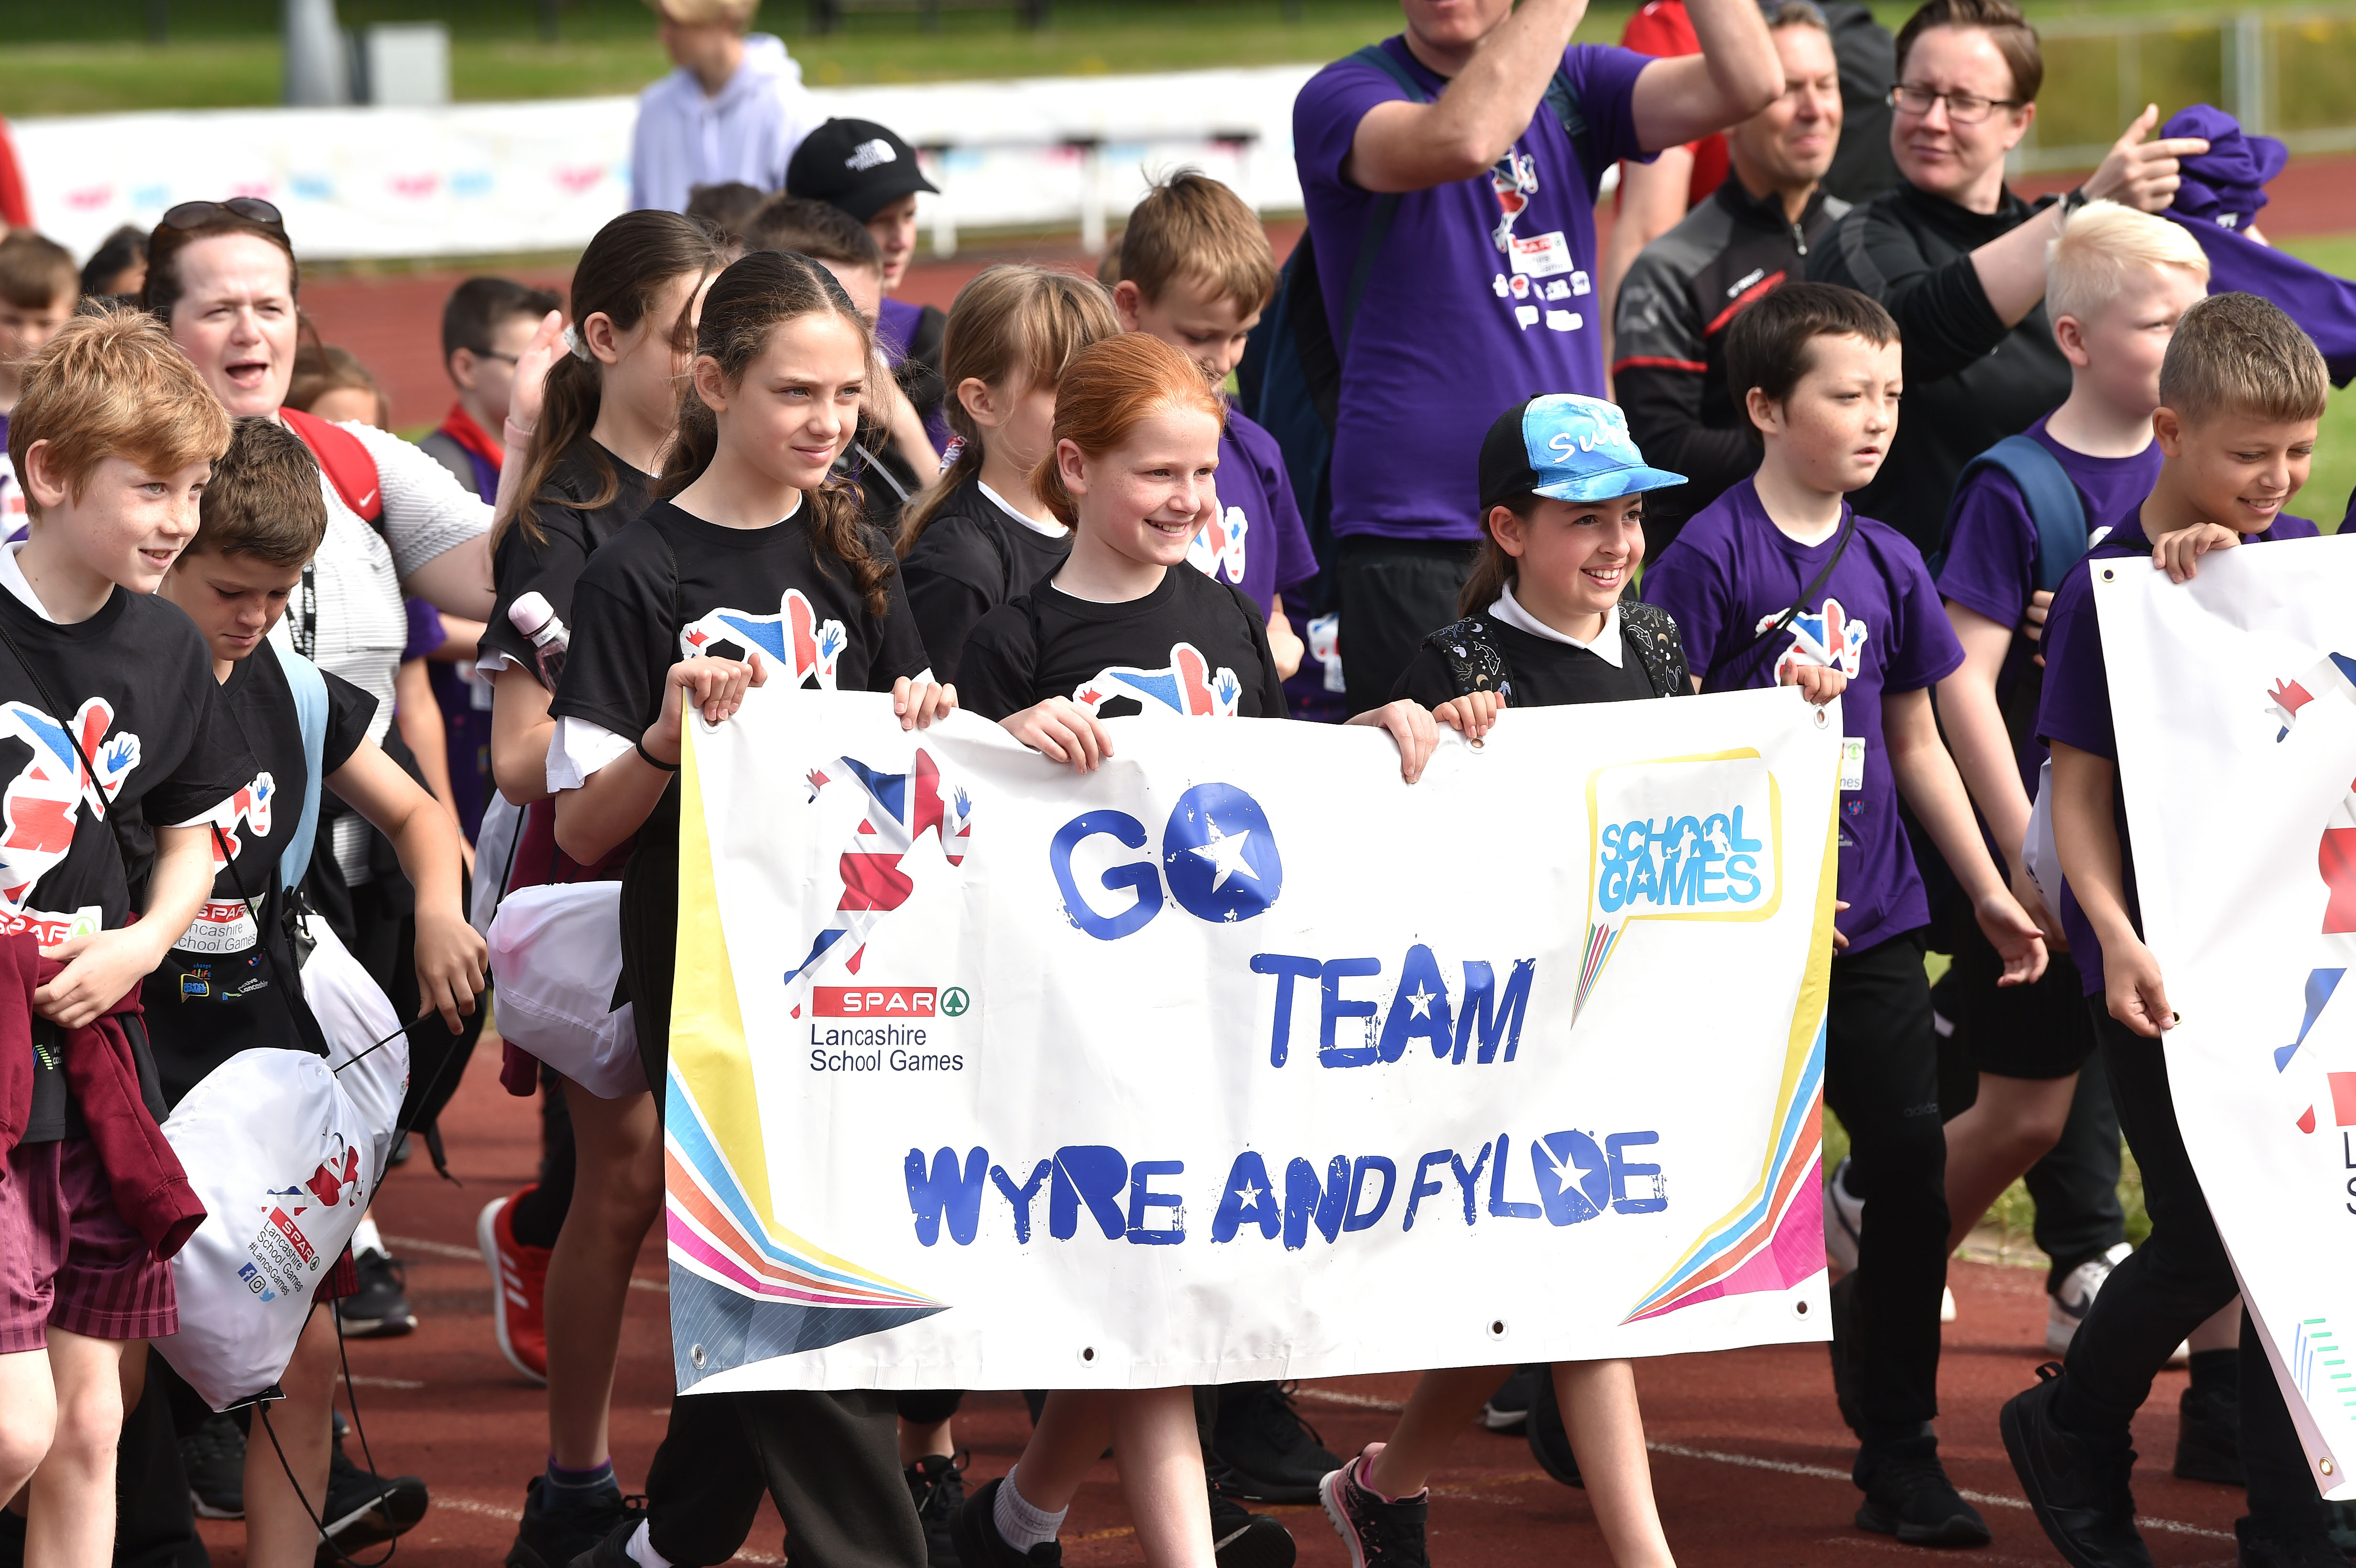 Lancashire School Games - Fylde and Wyre parade